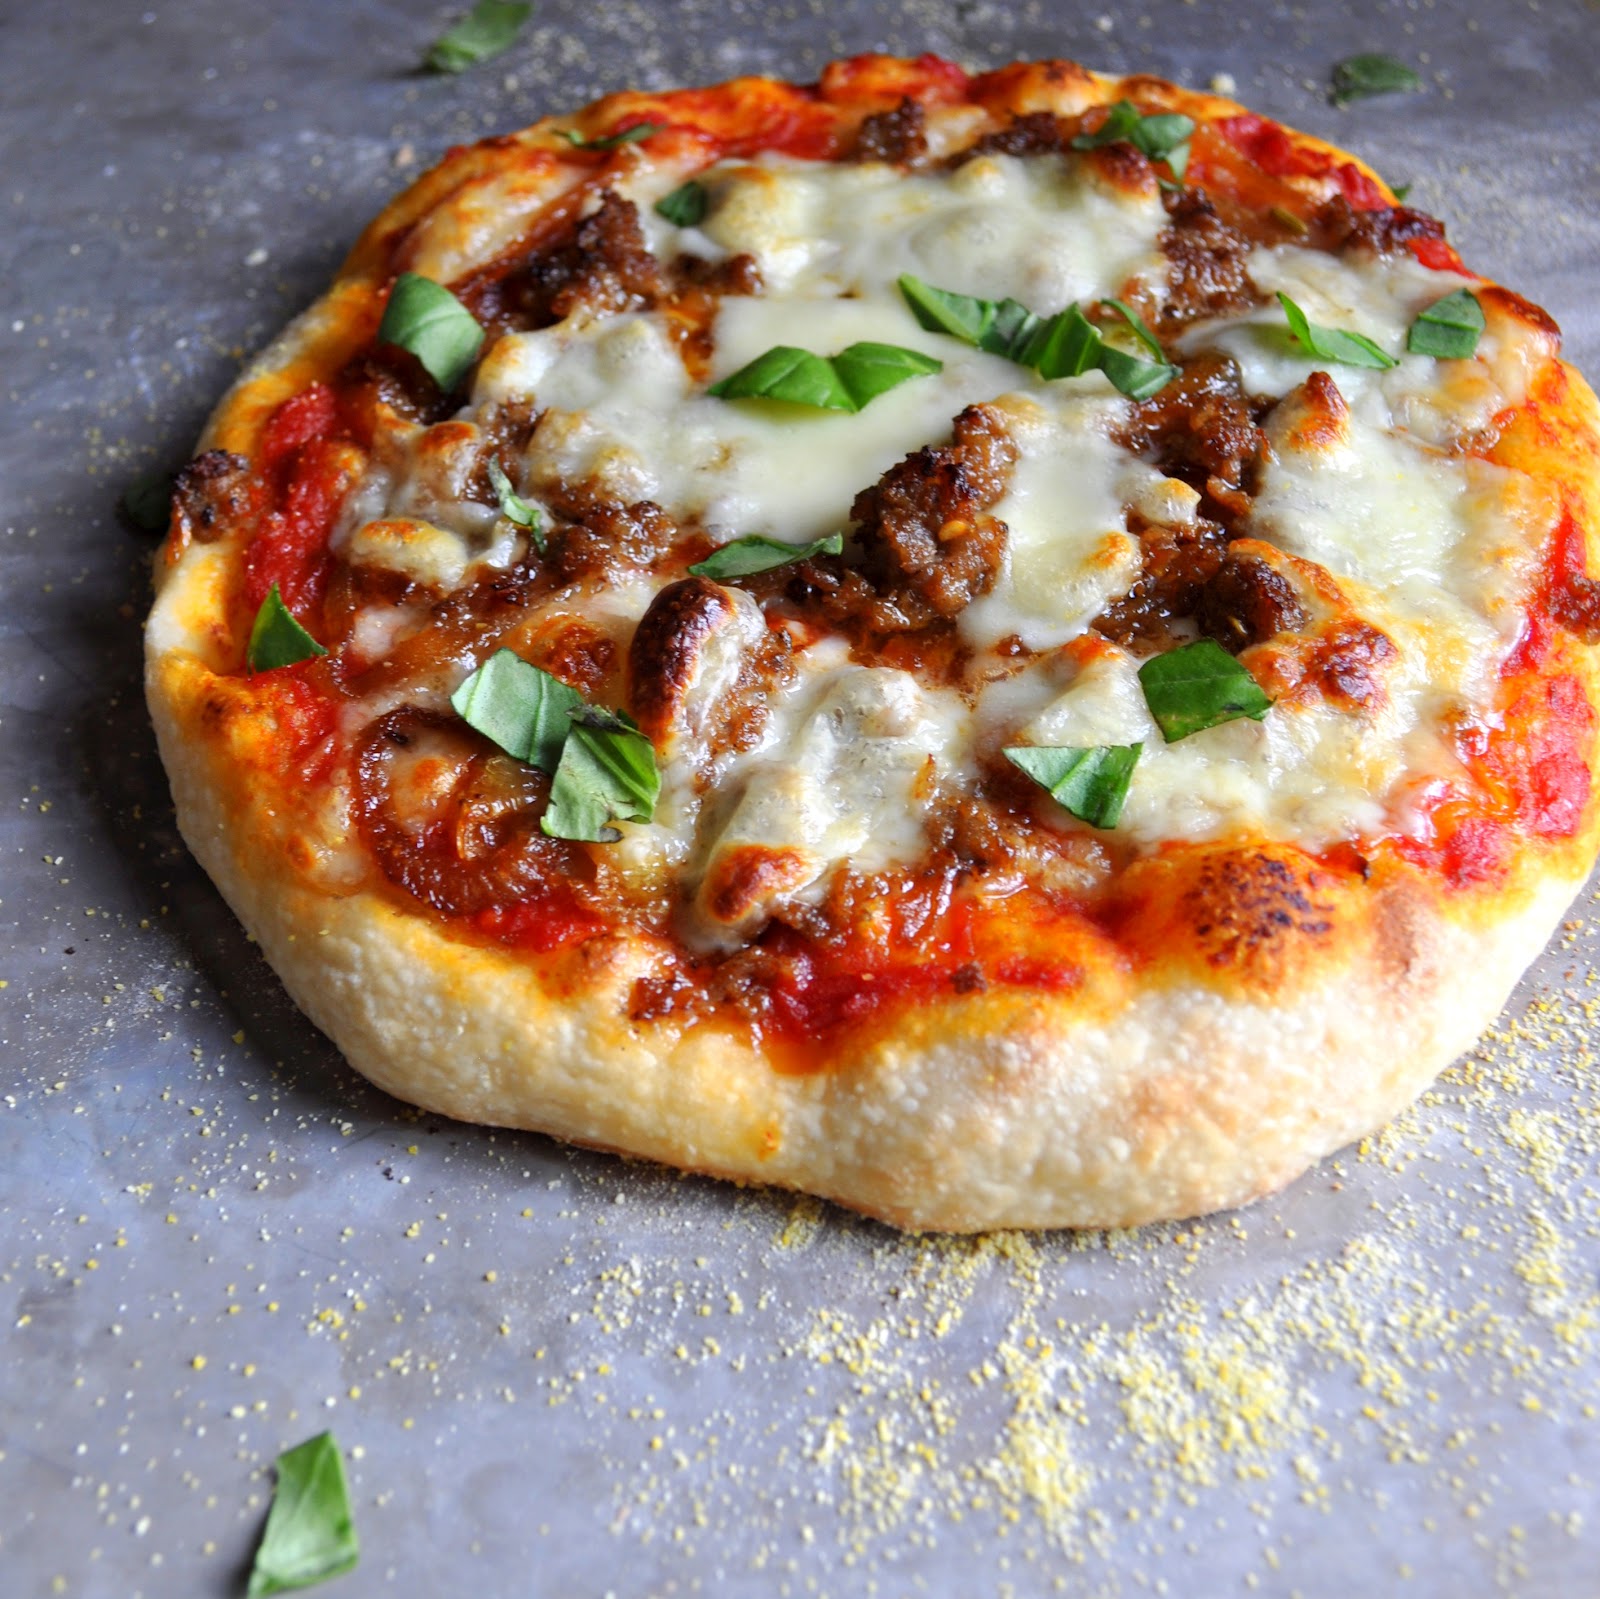 Мягкое тесто для пиццы рецепт без дрожжей